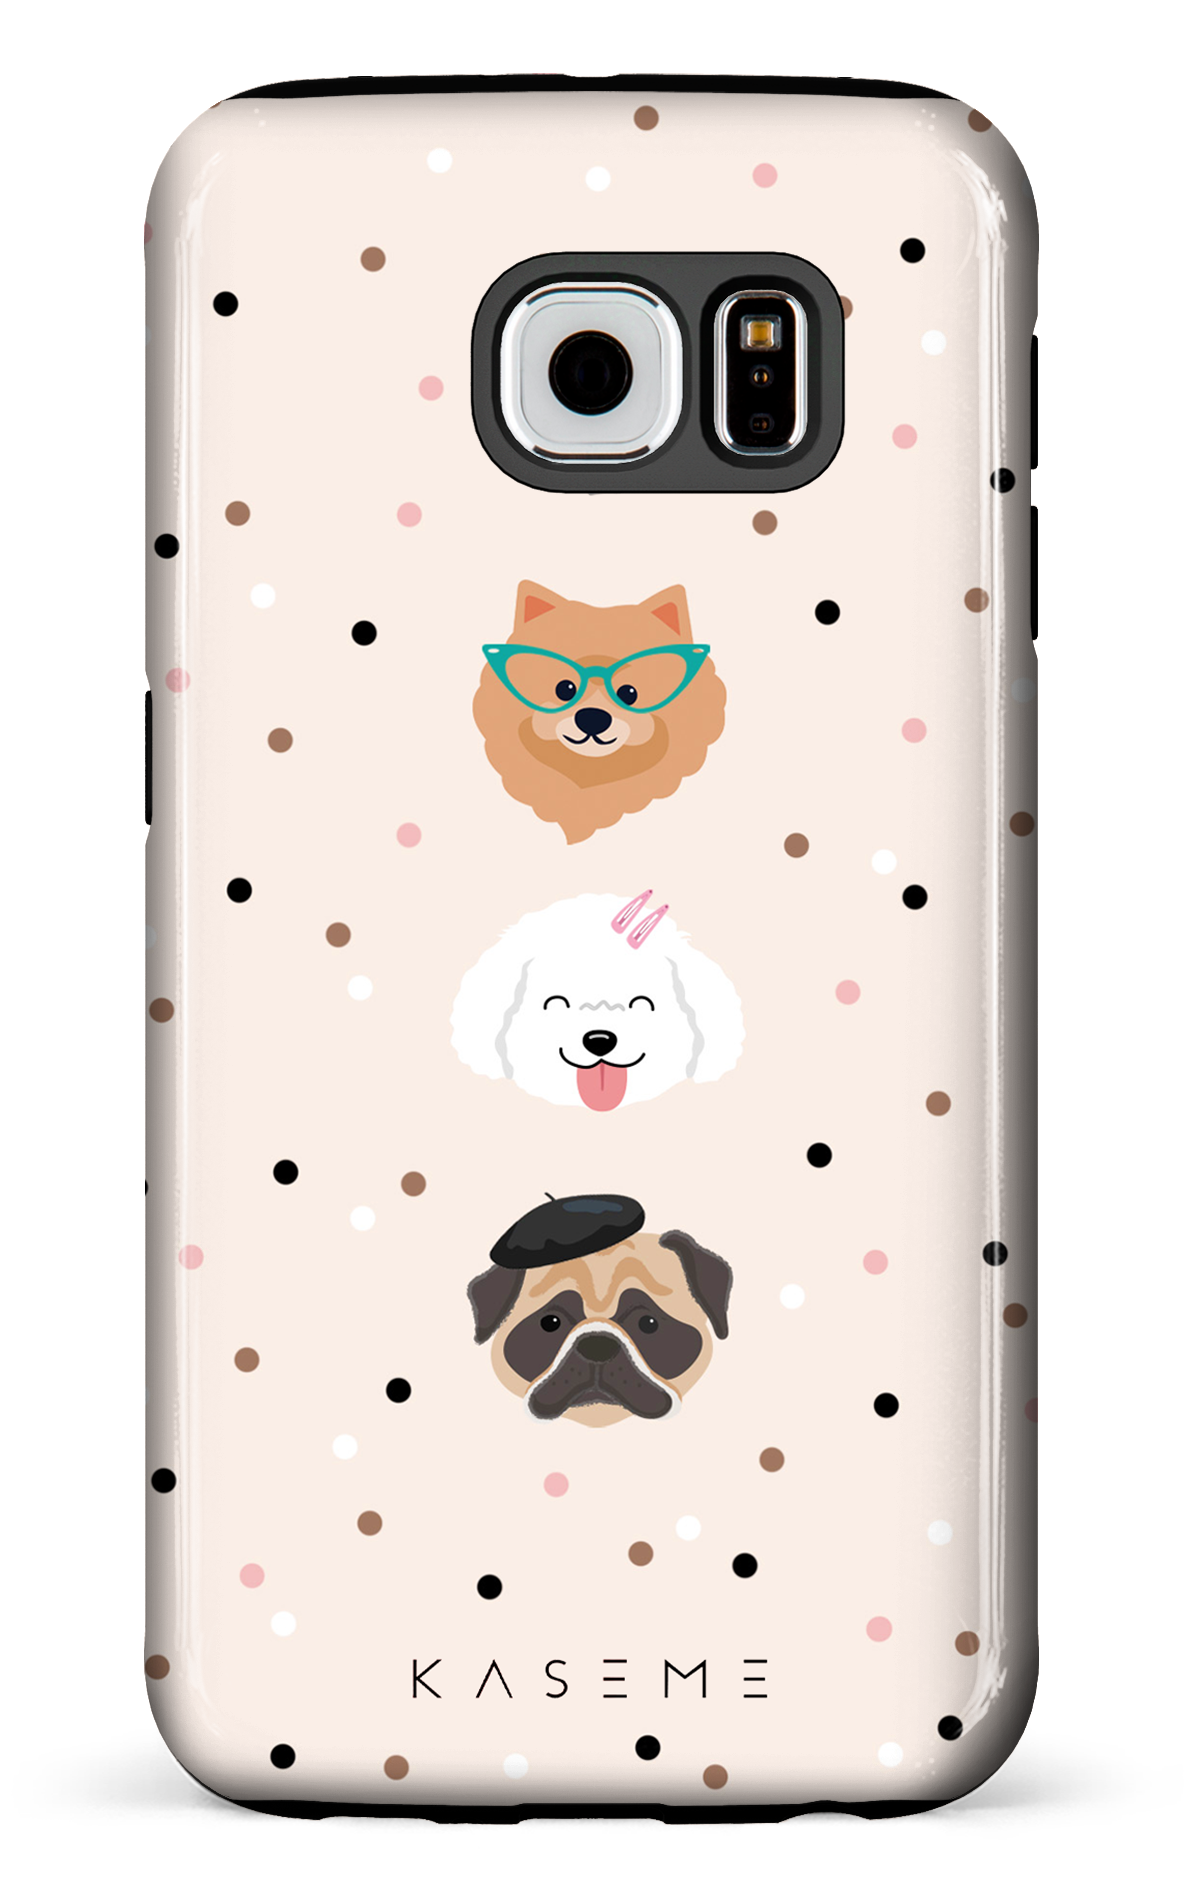 Dog lover by Marina Bastarache x SPCA - Galaxy S6